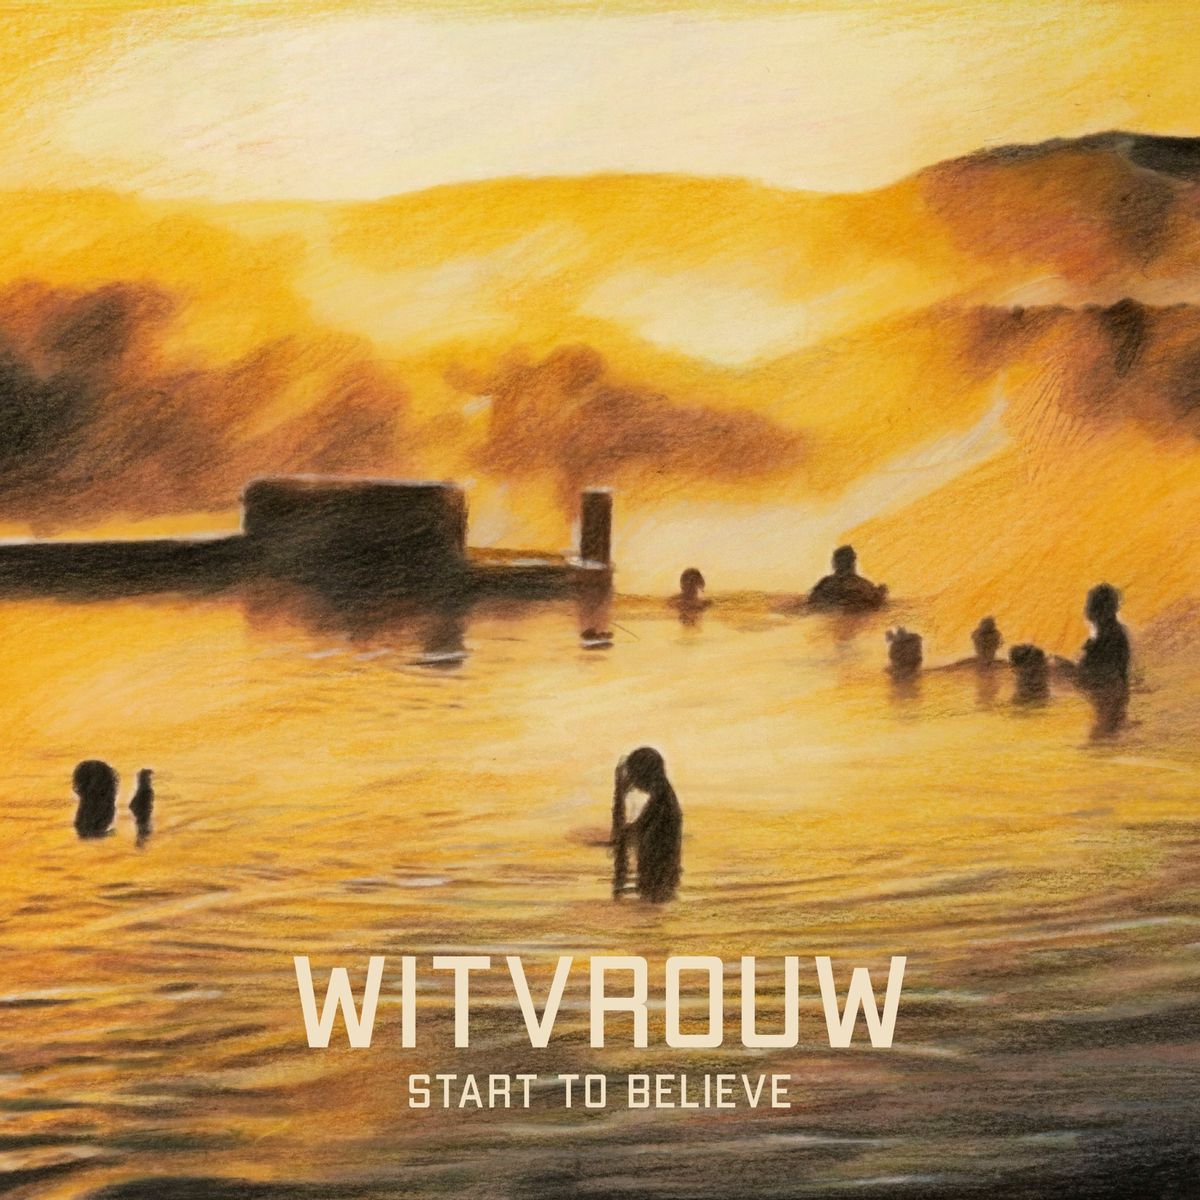 WITVROUW - Start To Believe